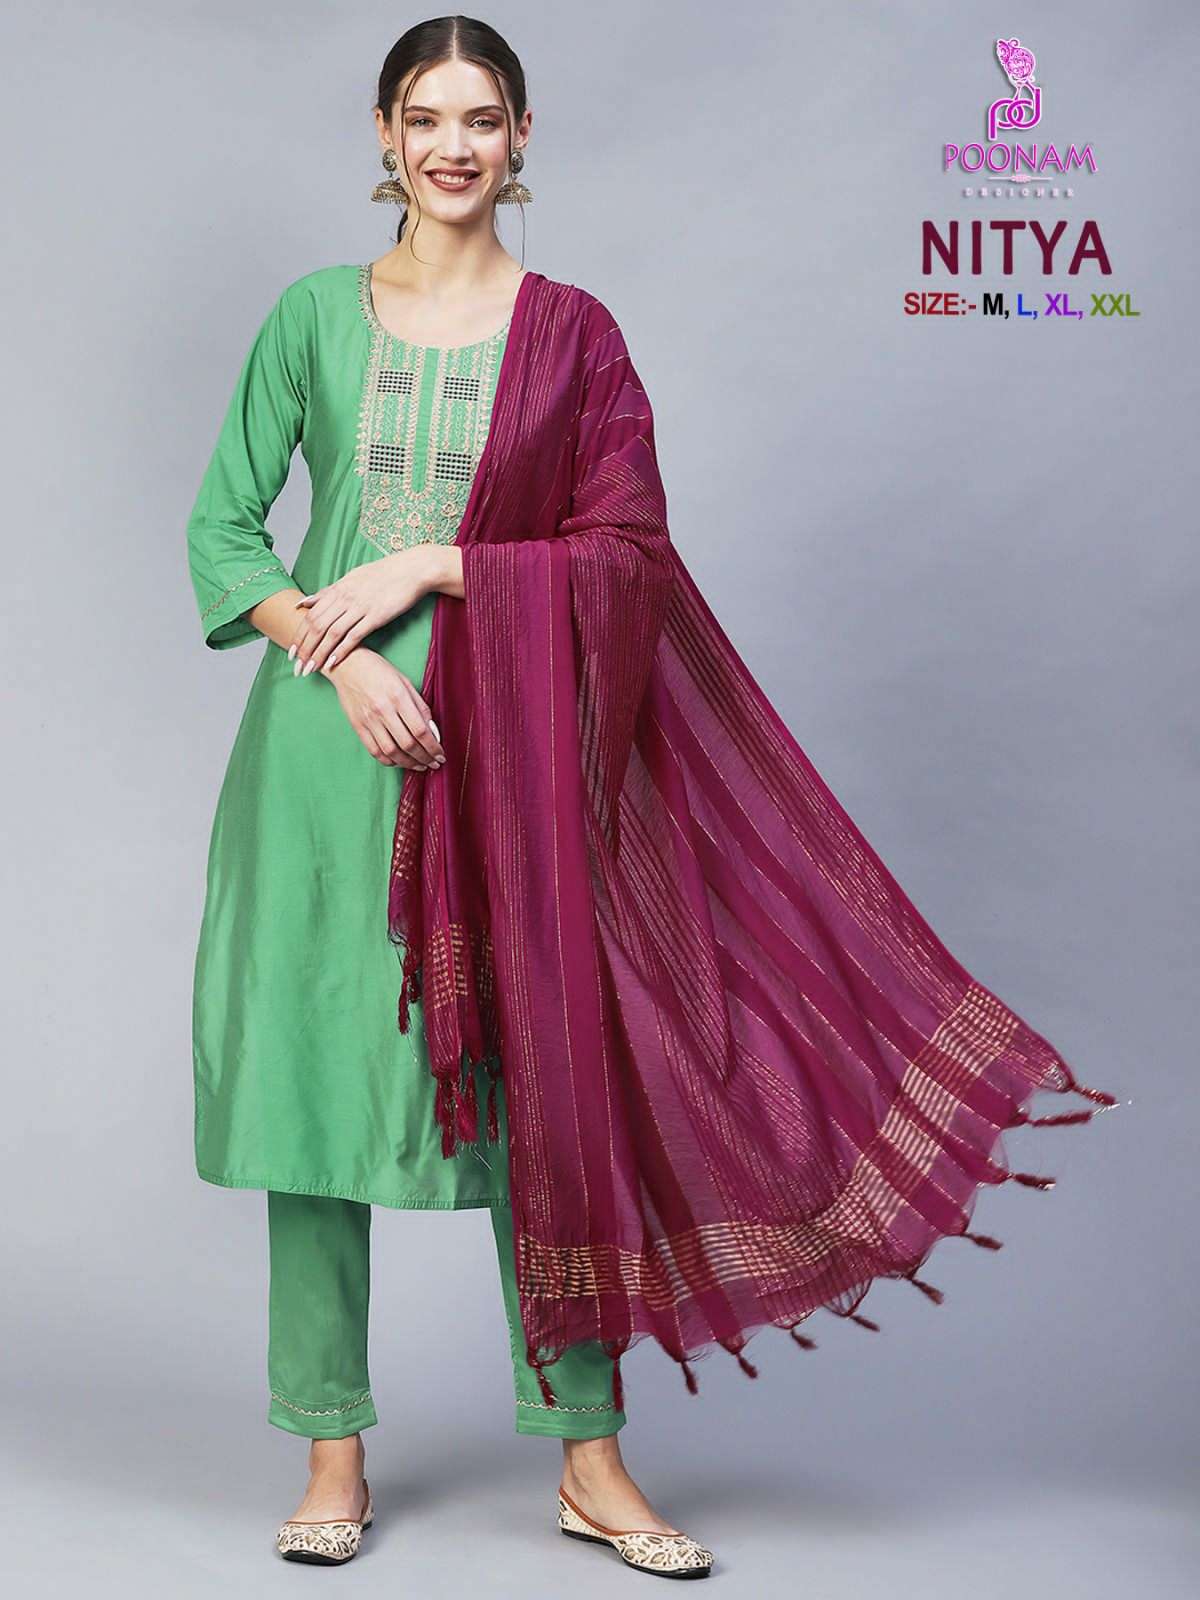 Poonam Designer Nitya Fancy Cotton Kurti Pant Dupatta Set Wholesaler